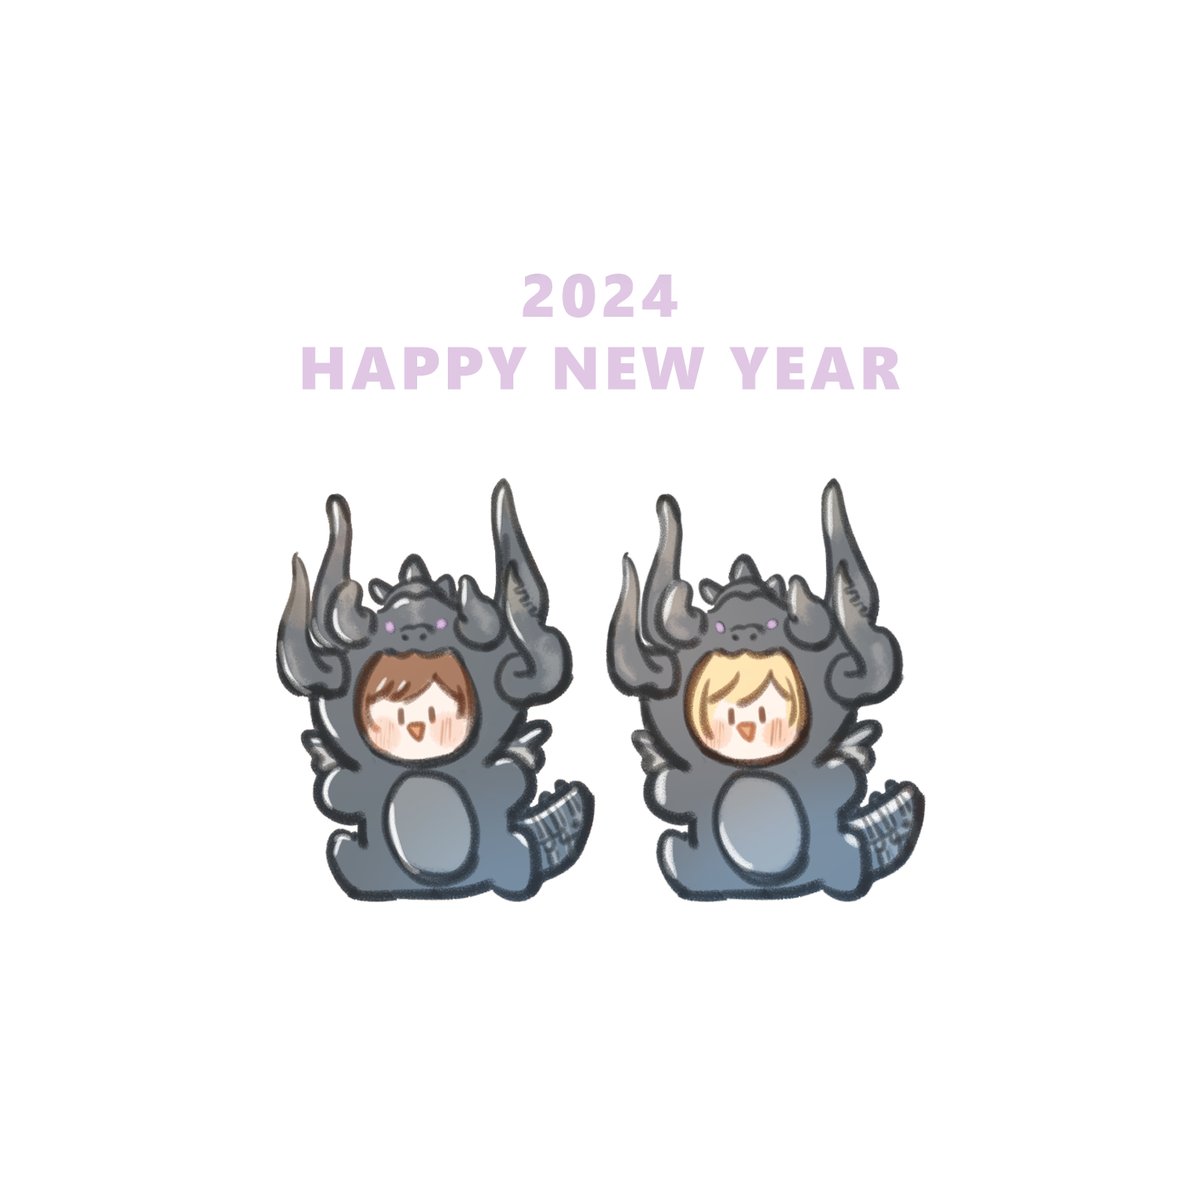 「HAPPY NEW YEAR 2024! 」|waazi😷刷推斬手指🔪のイラスト